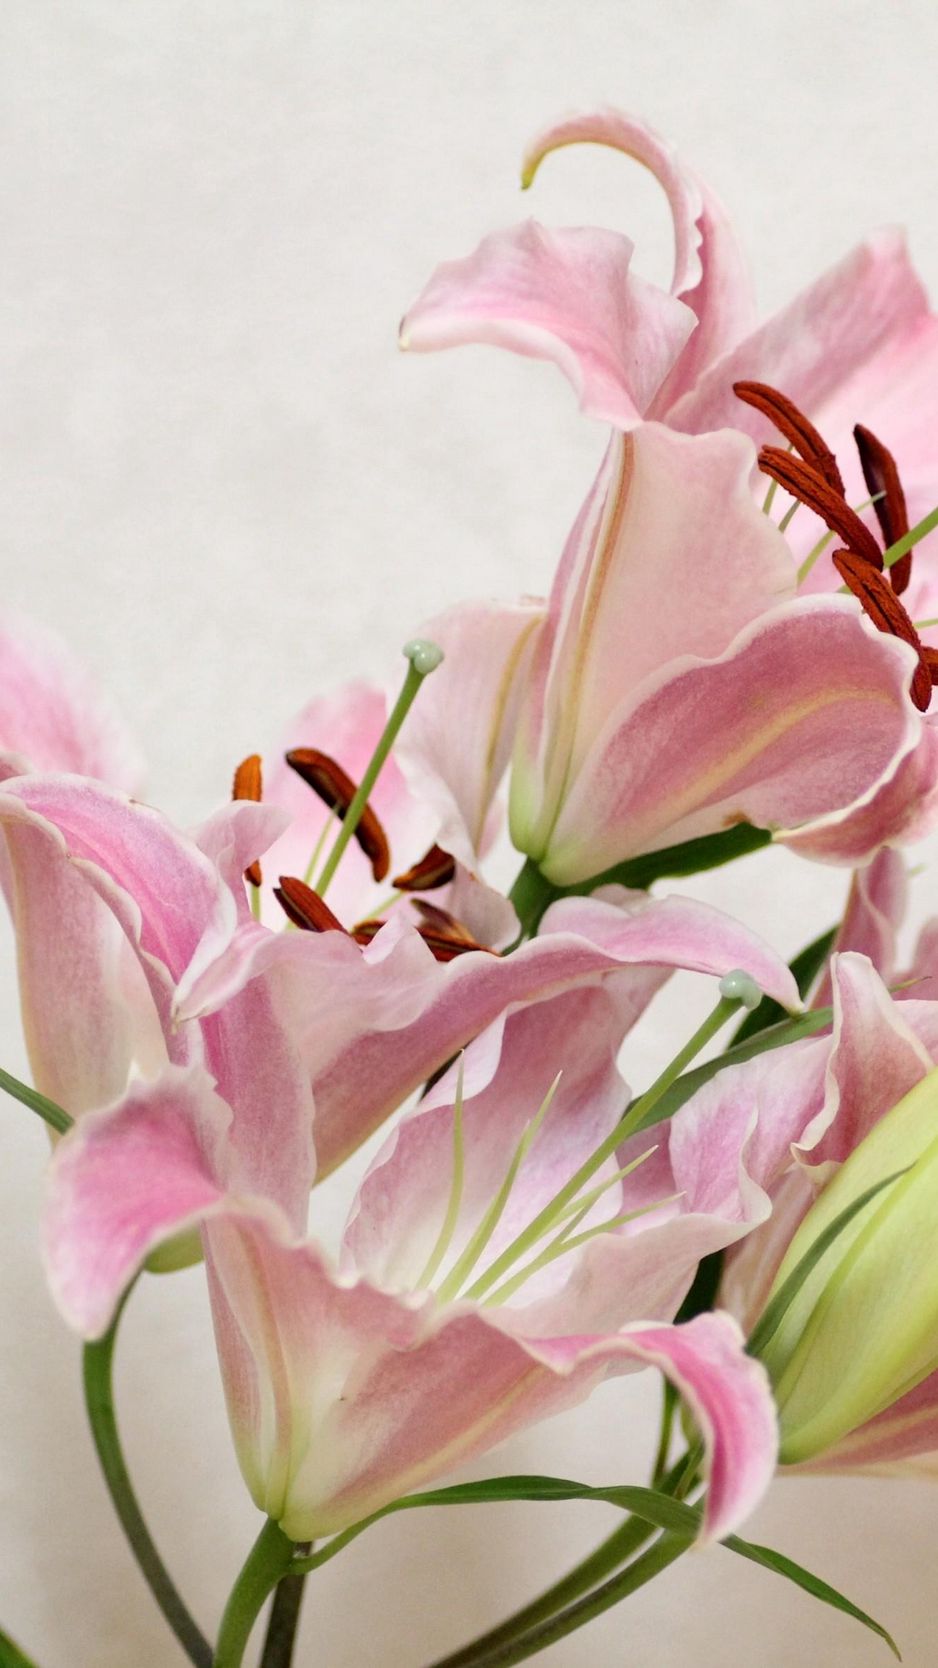 lily flower wallpaper